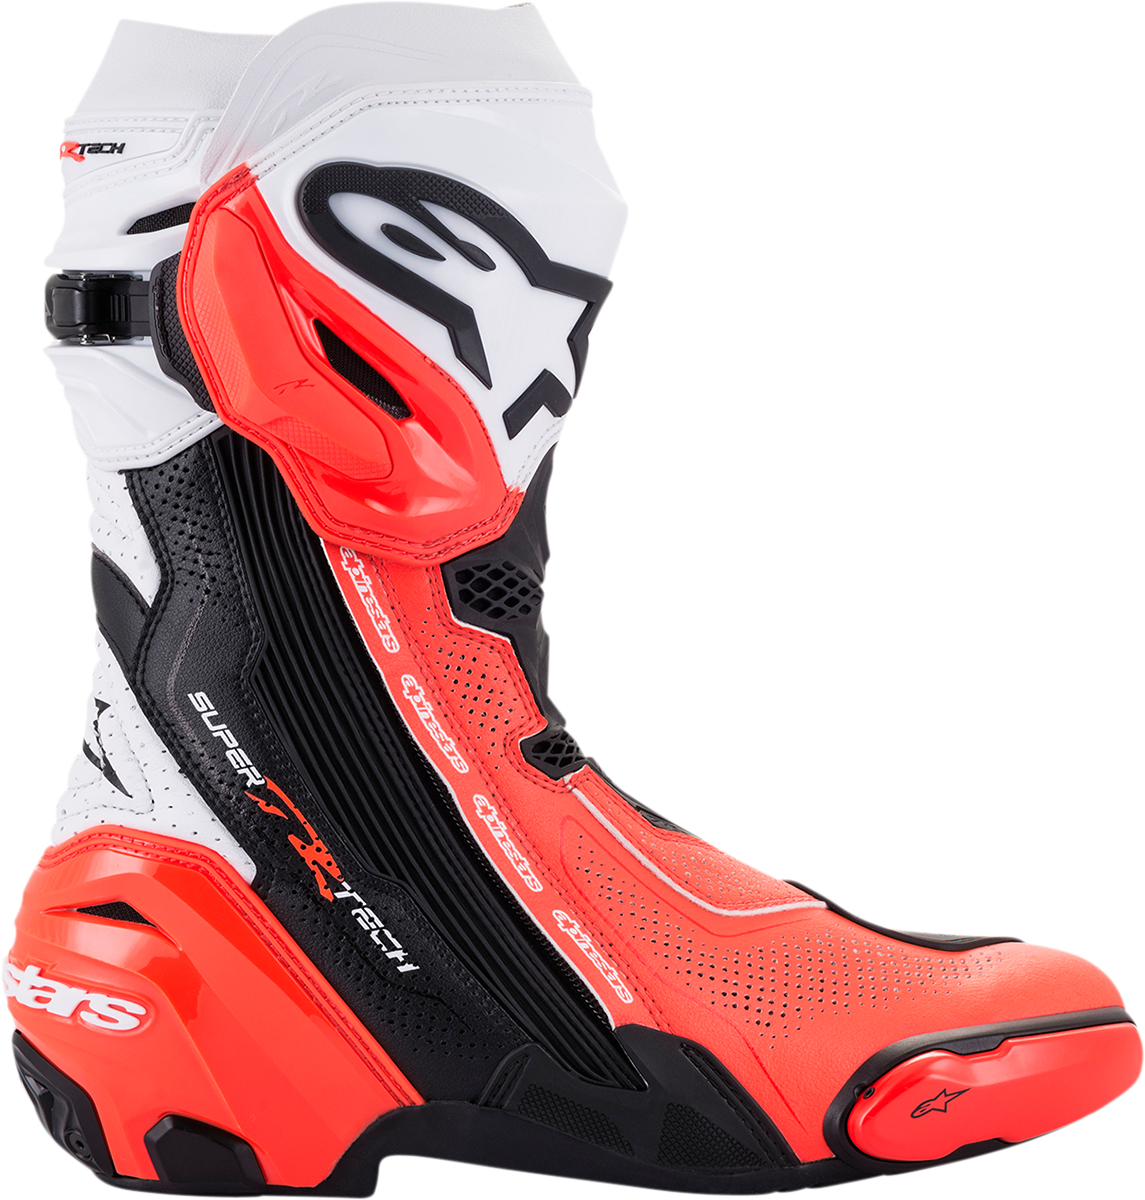 ALPINESTARS Supertech V Boots - Black/Fluo Red/White - US 9.5 / EU 44 2220121-124-44